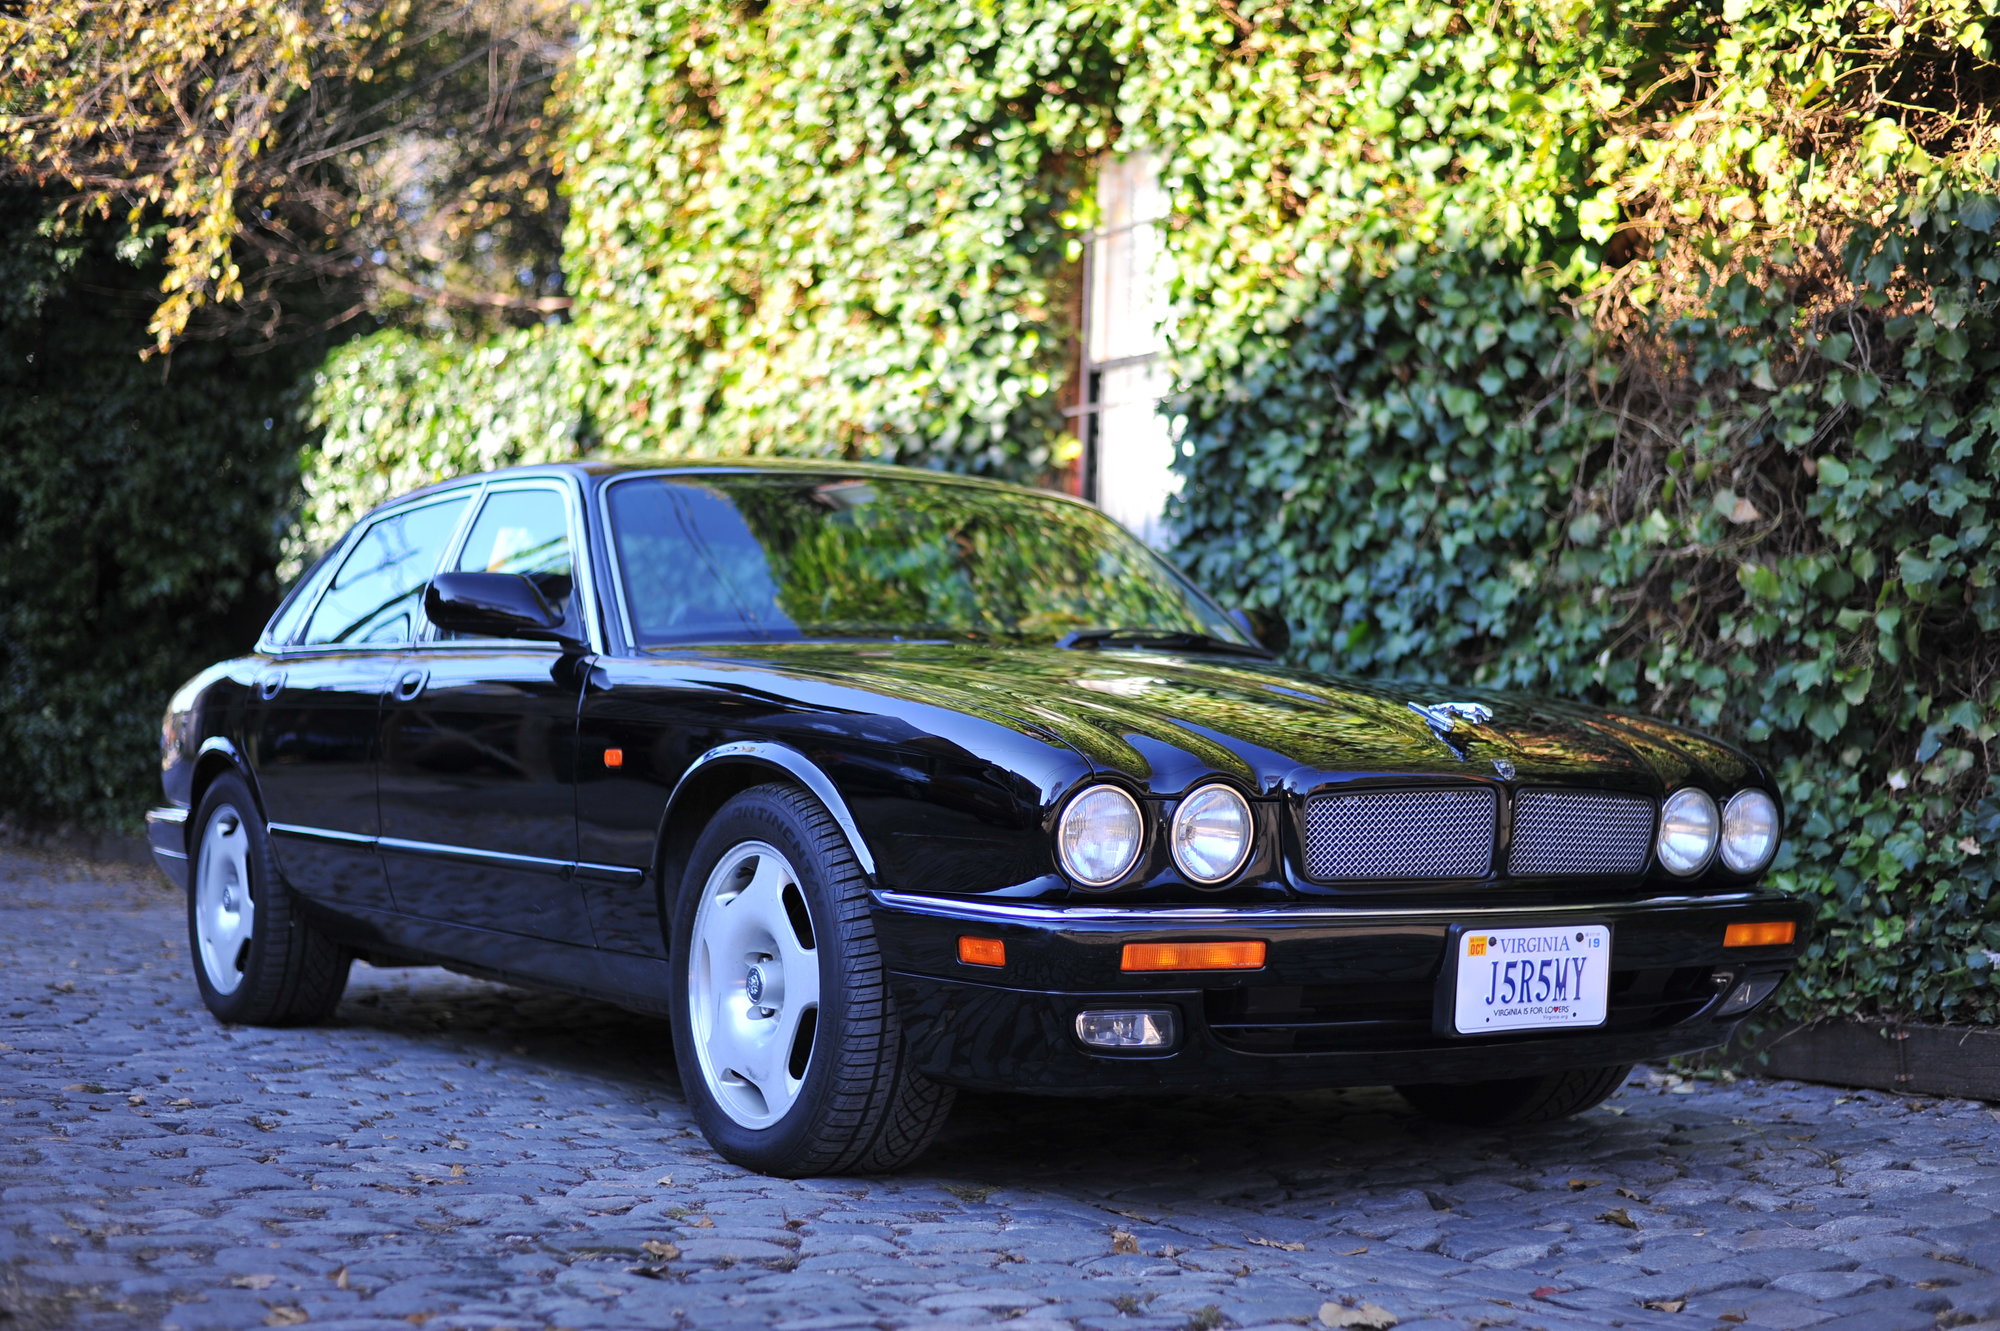 1996 Jaguar XJR - 1996 Jaguar XJR Black/Black 123k Miles - Used - VIN SAJPX1143TC775835 - 122,000 Miles - 6 cyl - 2WD - Automatic - Sedan - Black - Richmond, VA 23227, United States